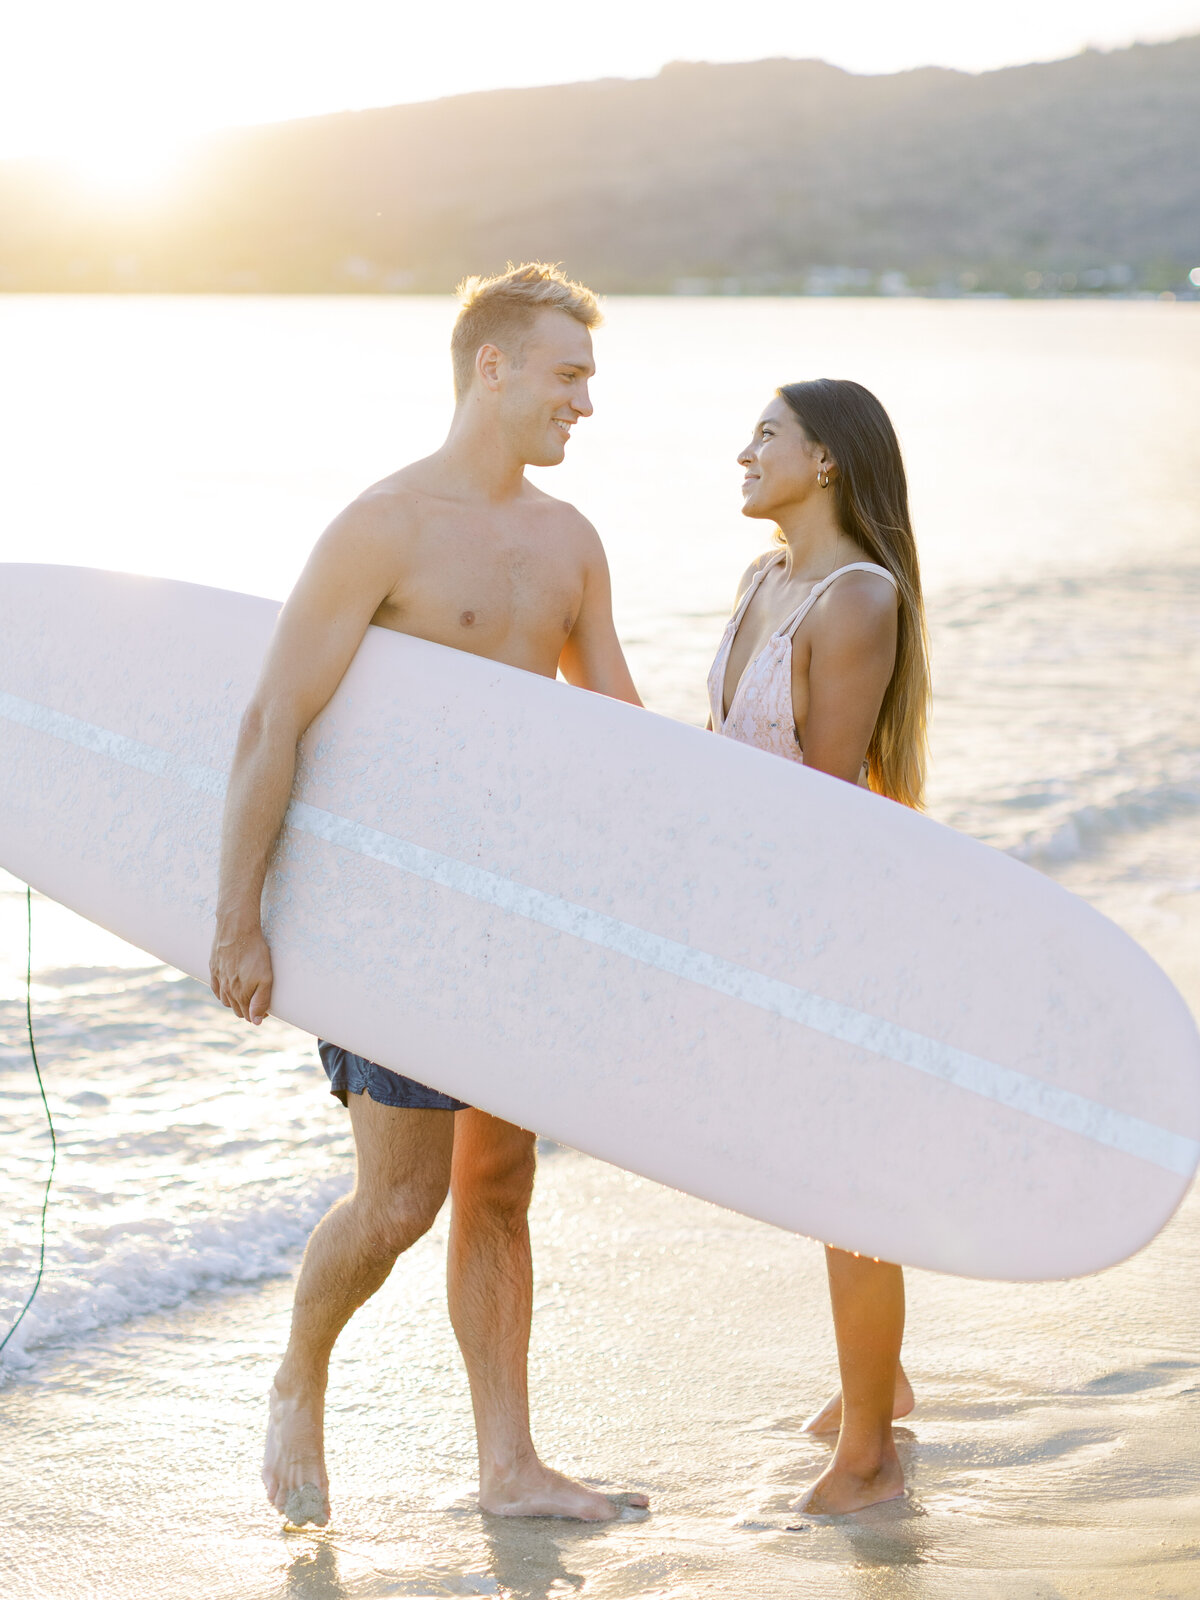 couple-on-beach-with-surfboard